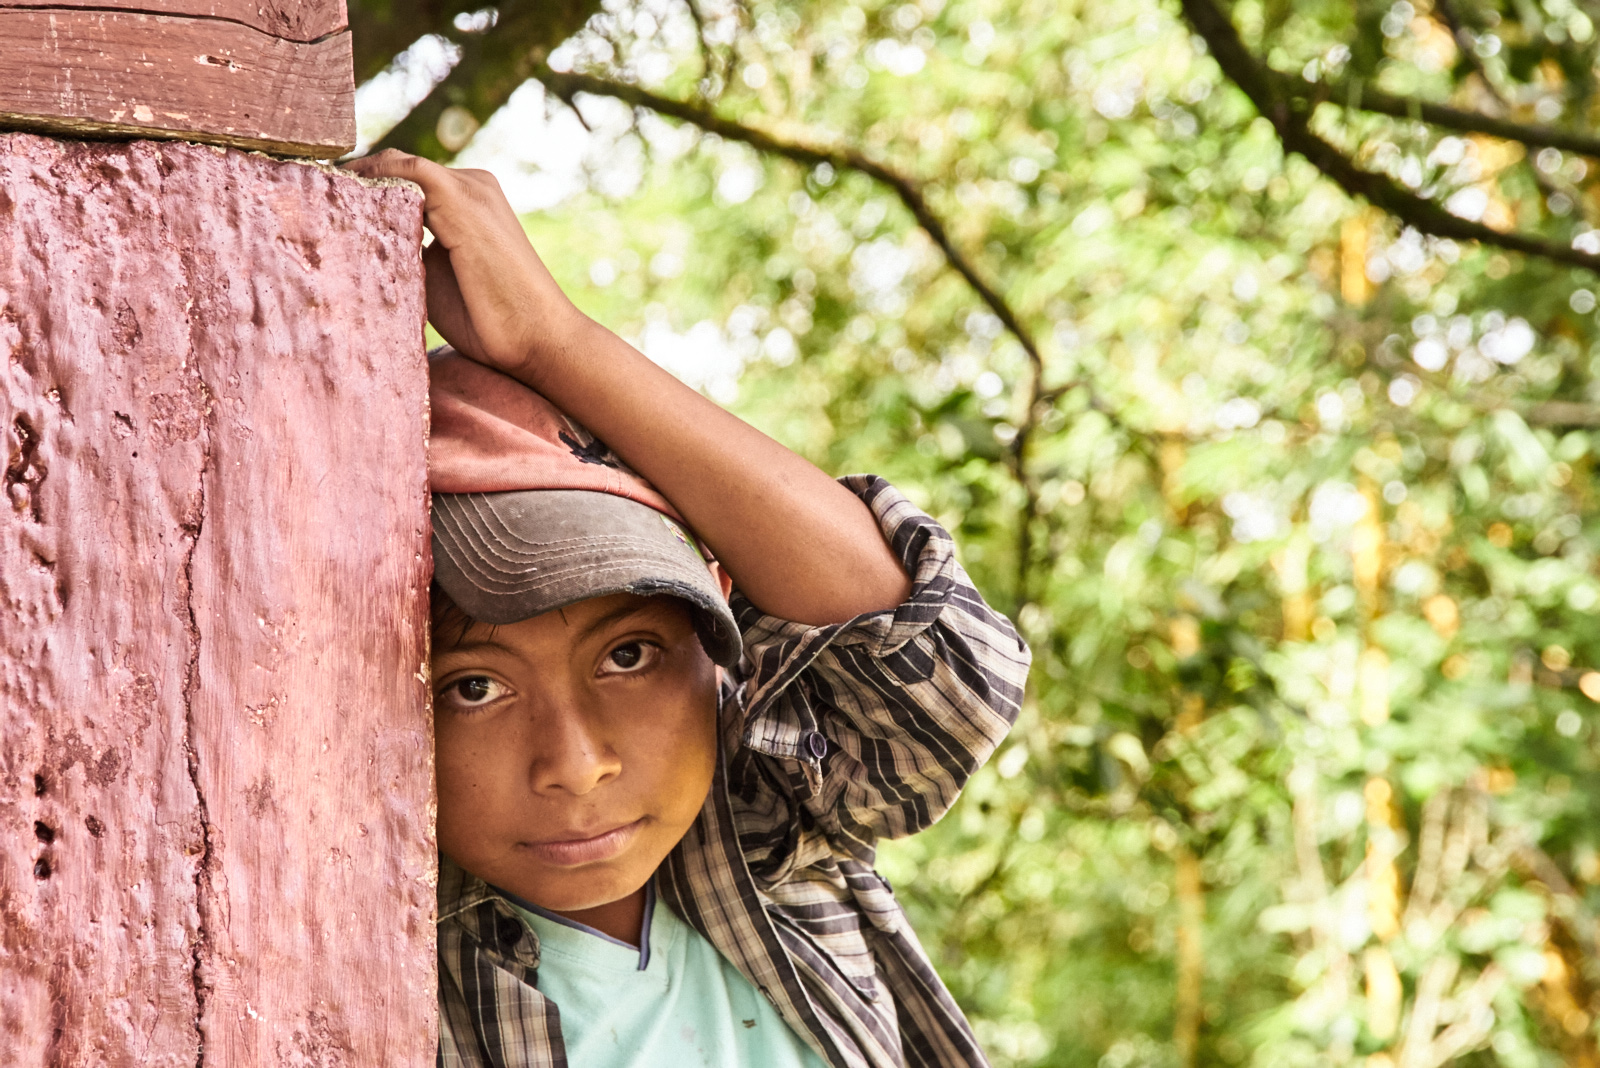  Kids in Nicaragua. 